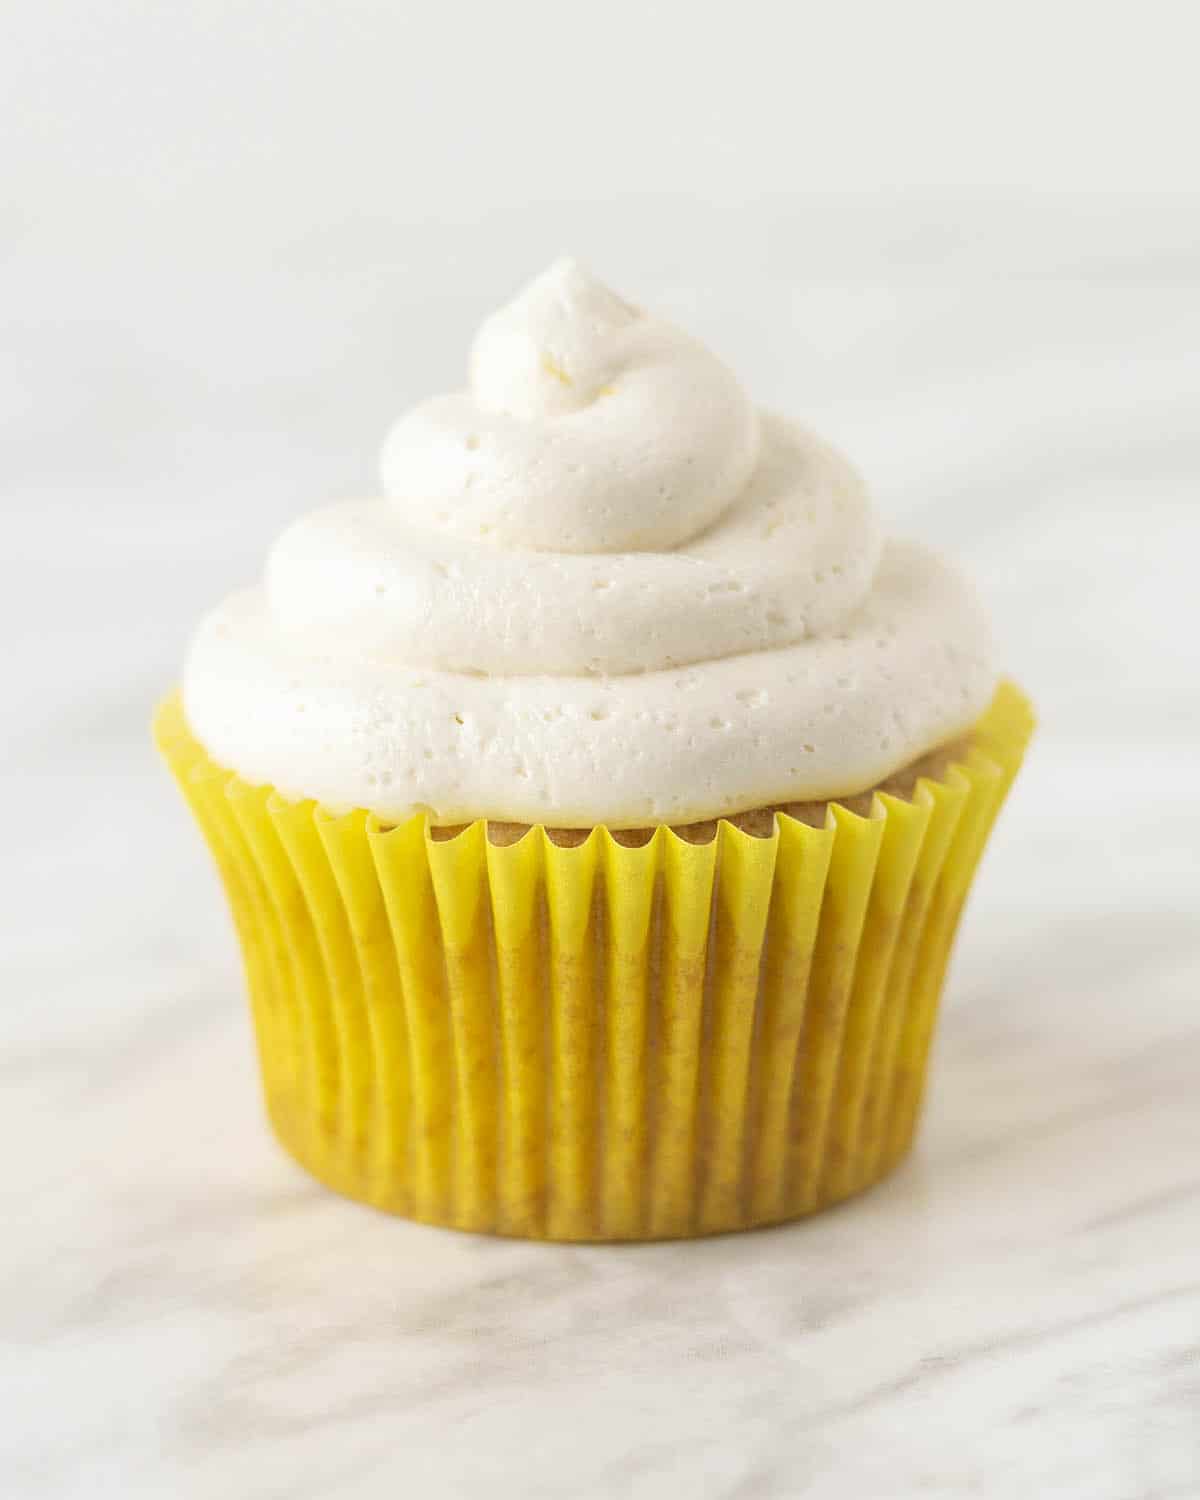 A lemon cupcake topped with dairy-free lemon buttercream.